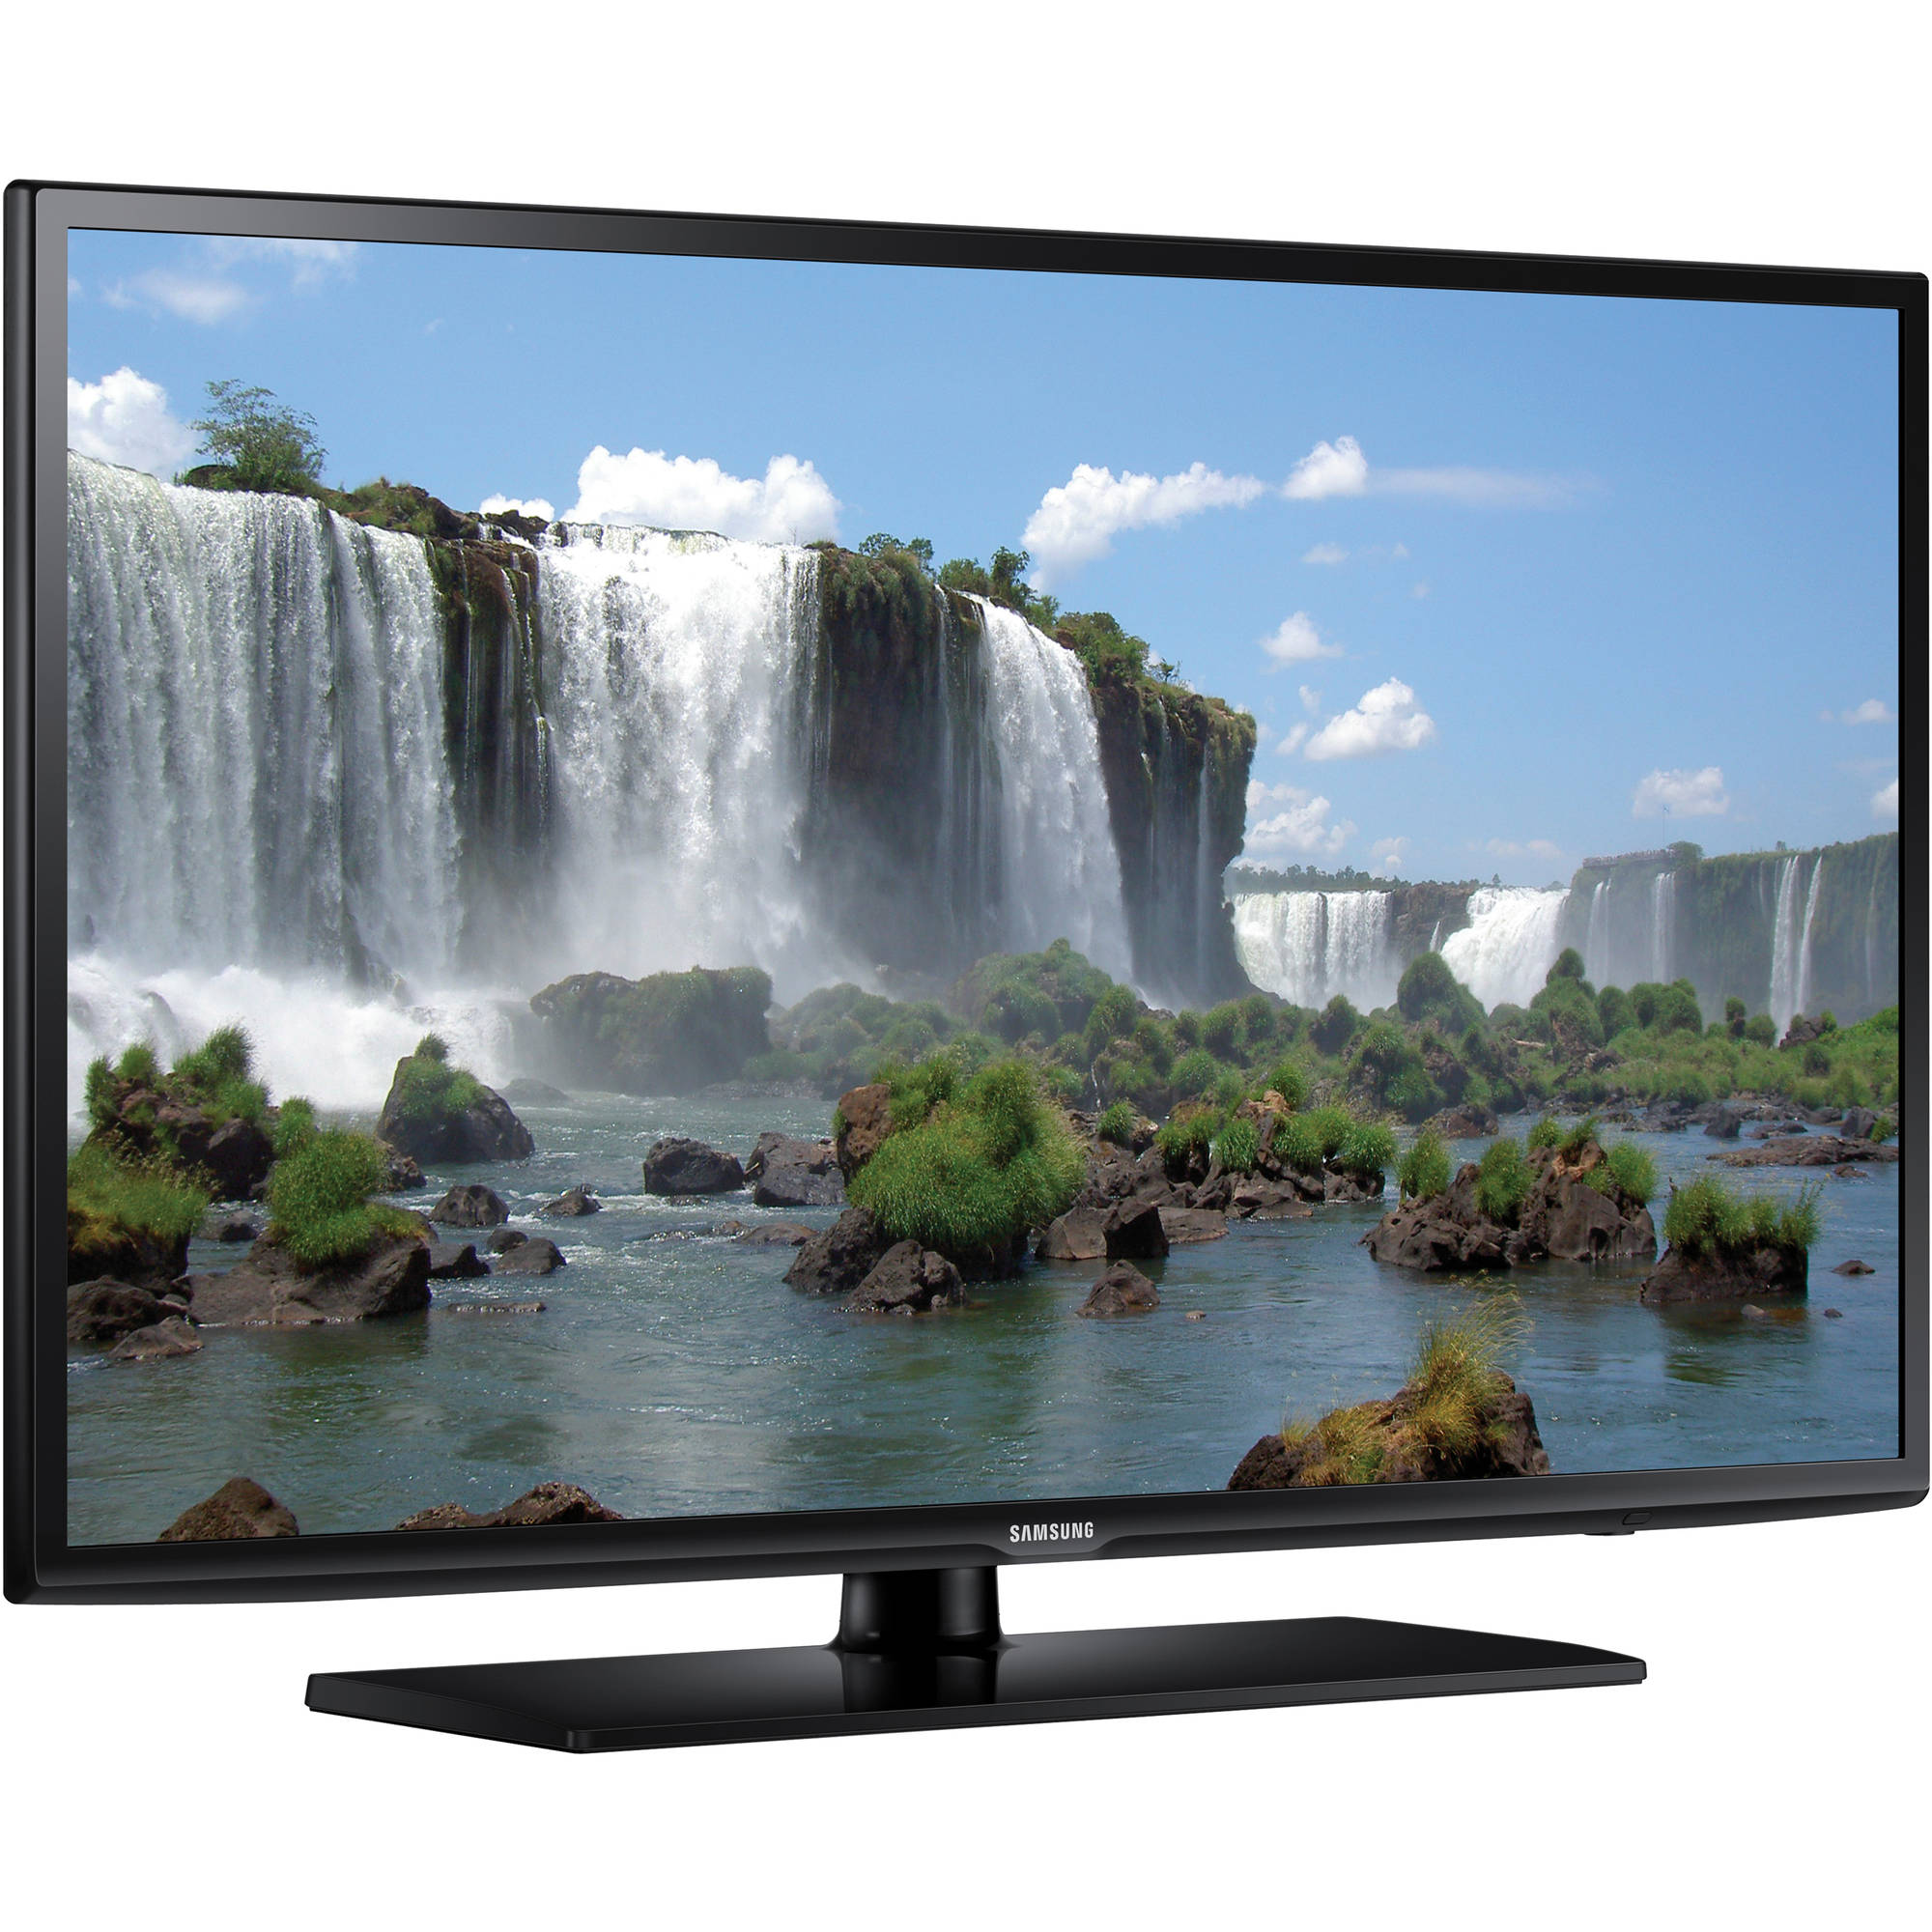 Samsung UN60J6200AF/XZA 60 Inch - J6200 Series Led TV - Smart TV